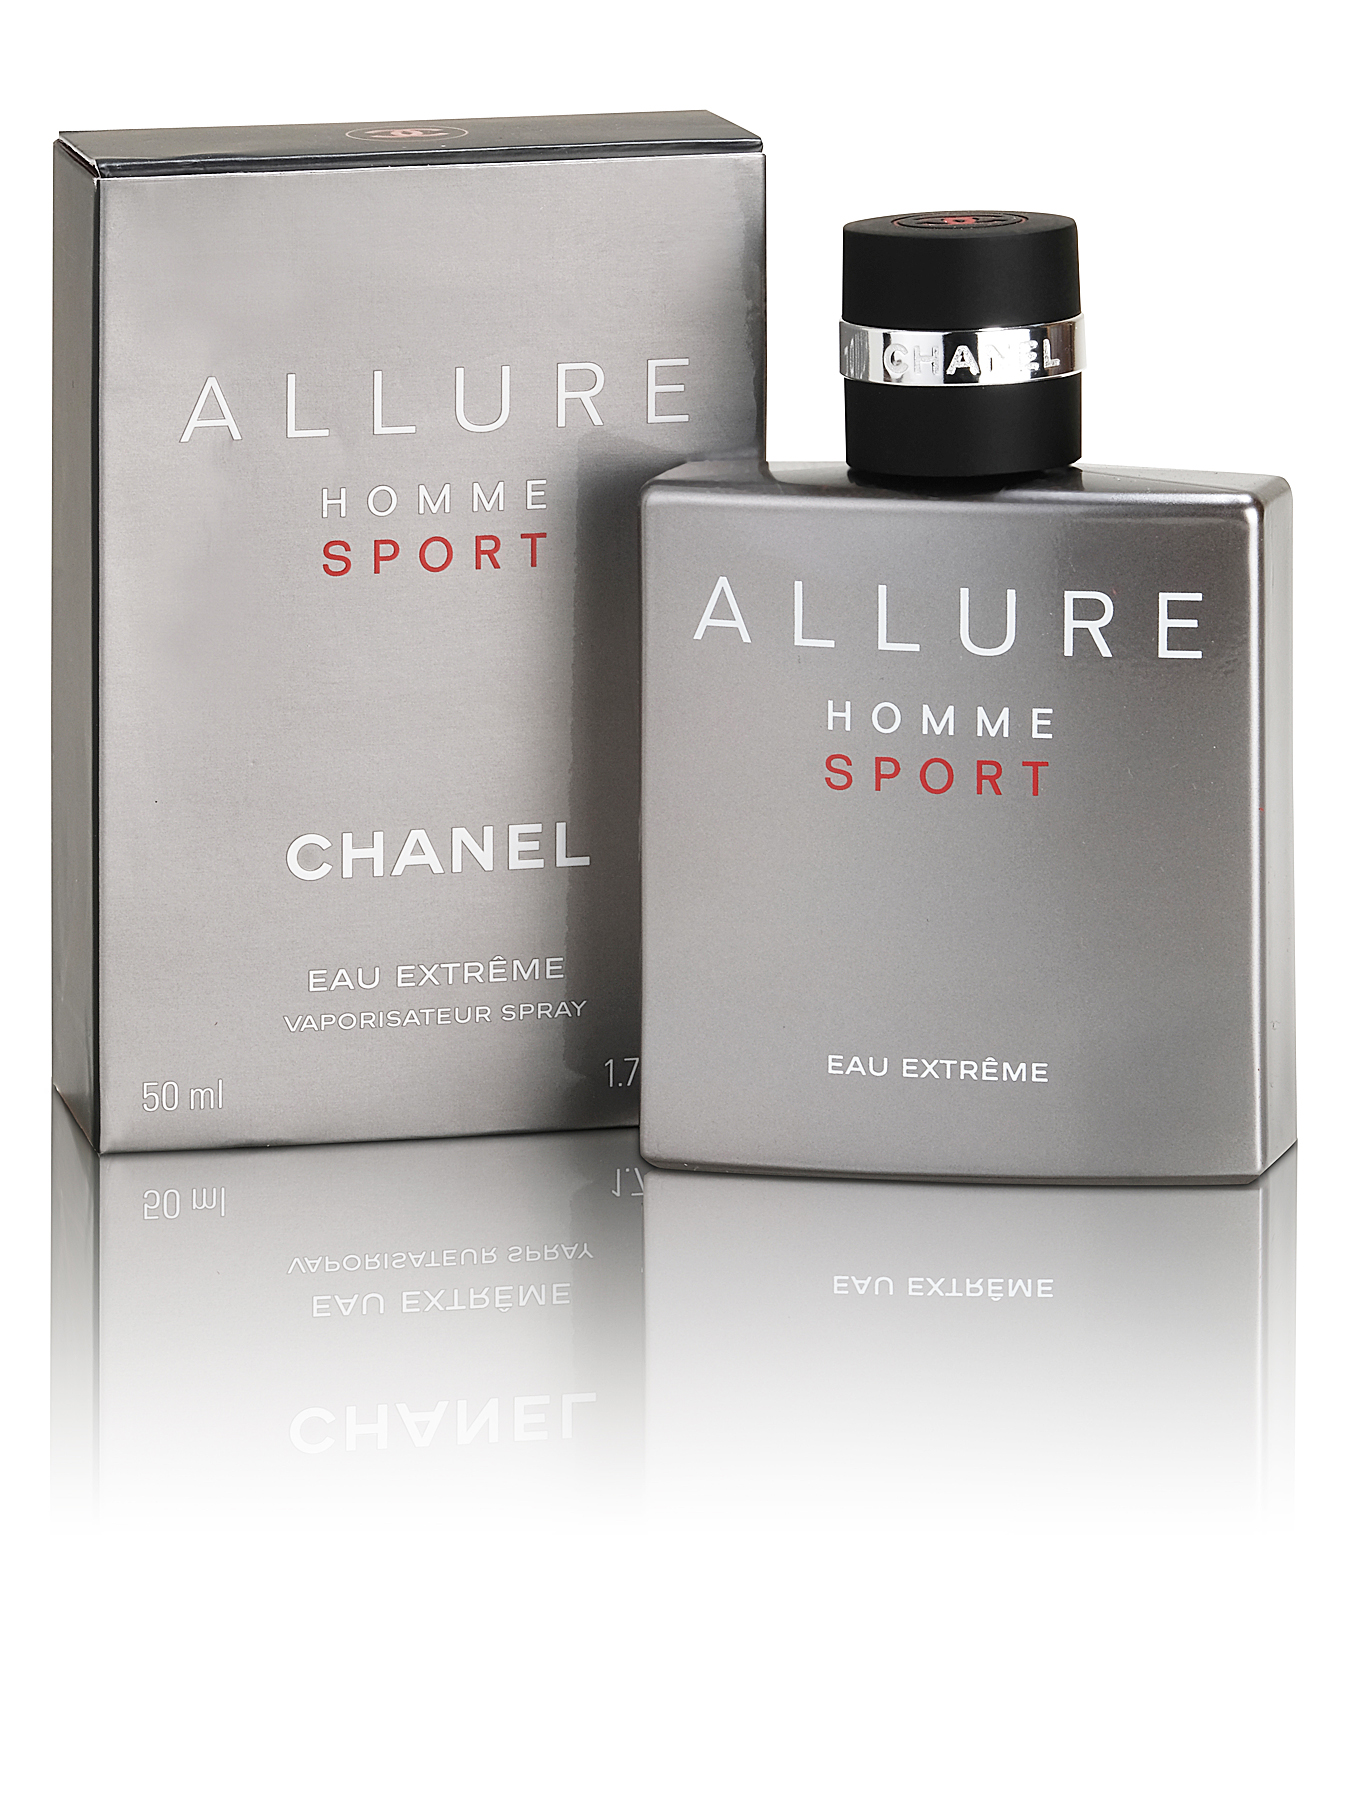 Chanel homme sport цена. Шанель Allure homme Sport. Chanel Allure Sport men 100ml. Chanel Allure Sport extreme 100ml. Chanel Allure homme Sport 50.